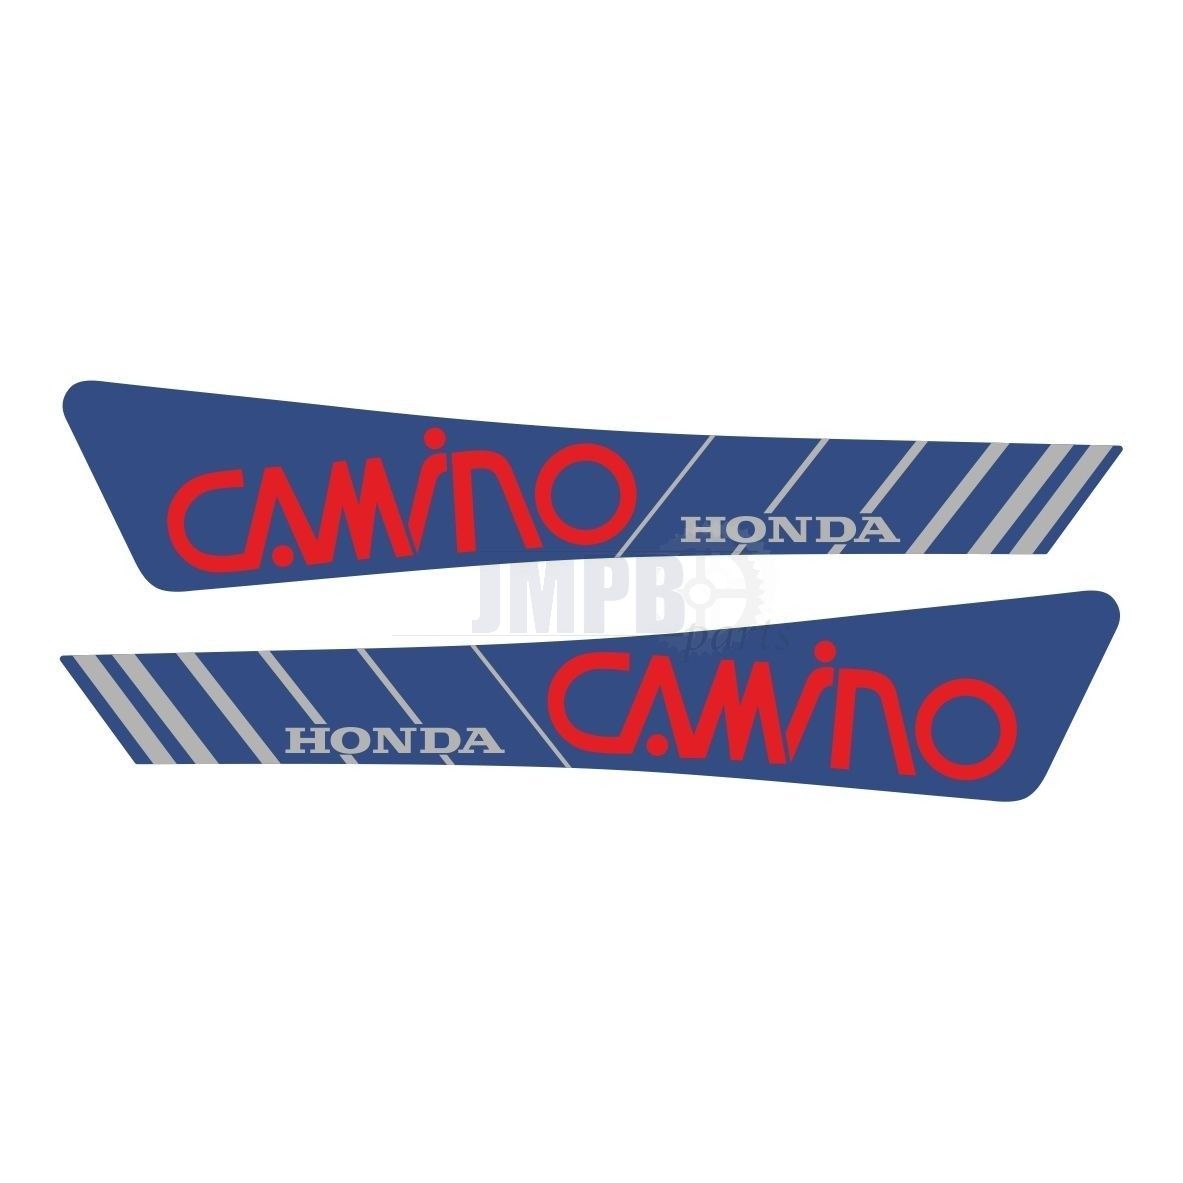 Honda Hobbit Moped Camino Sticker Decal set (carnaval